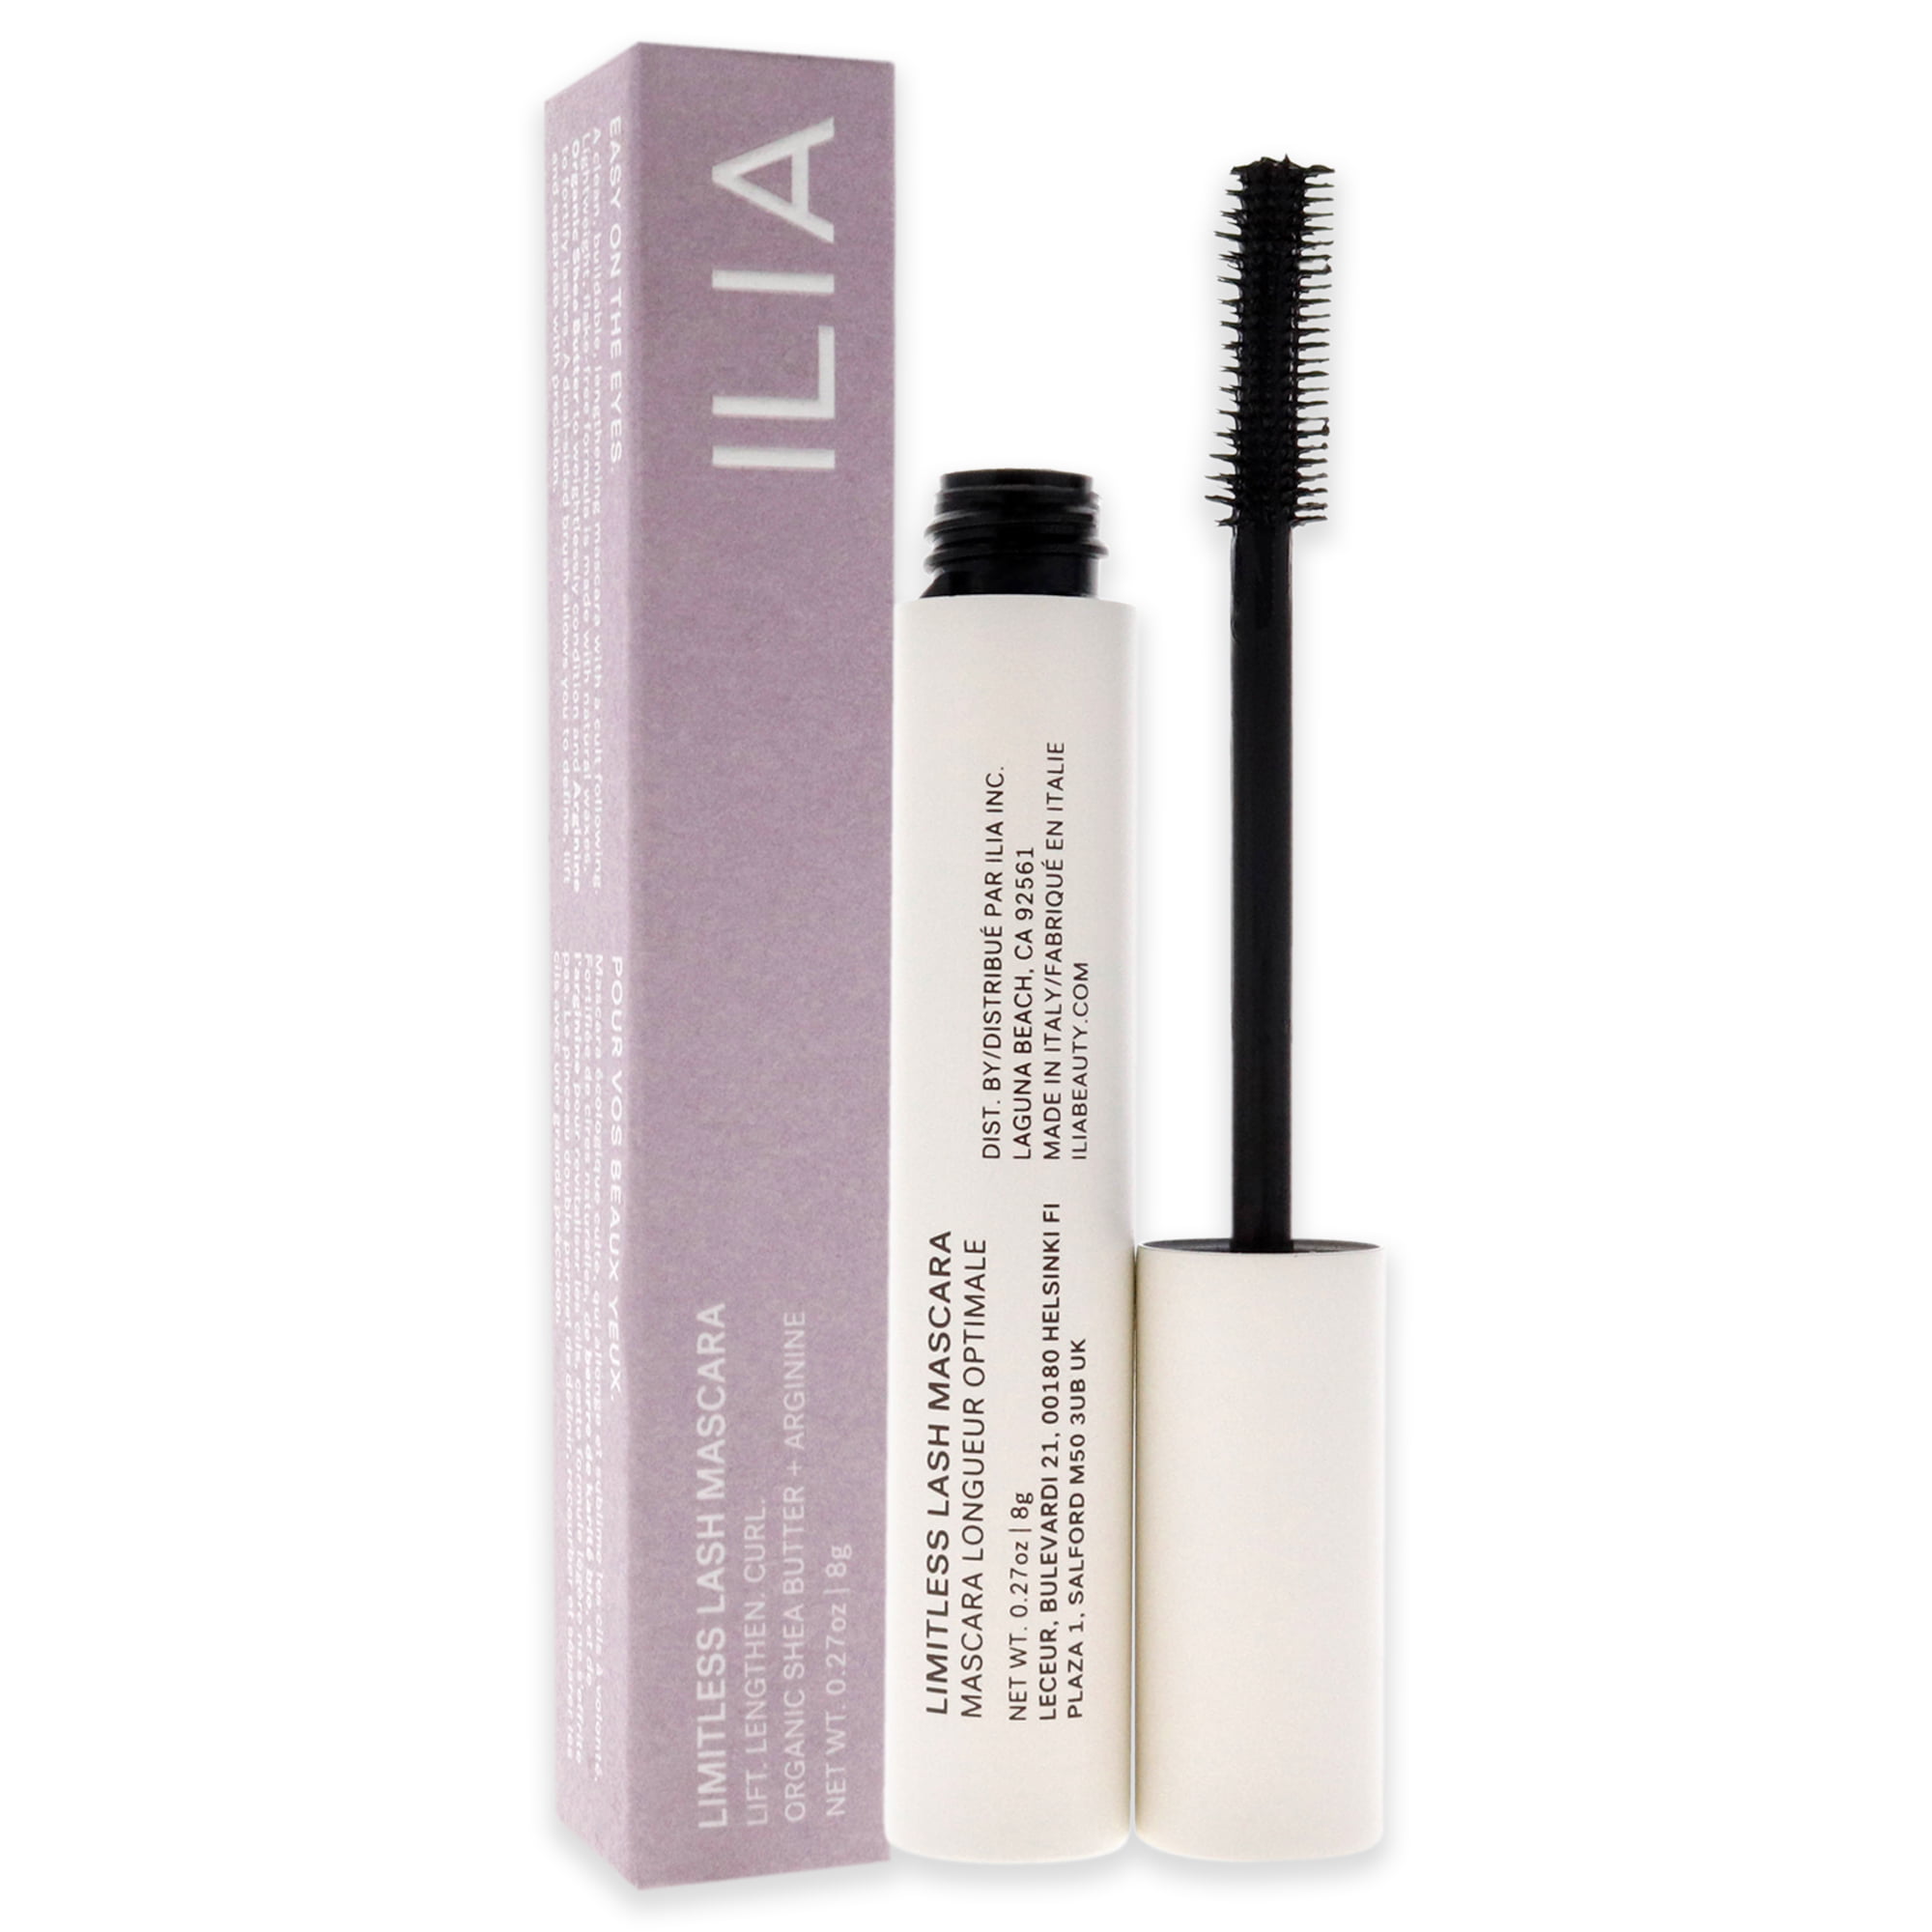 ILIA Beauty Limitless Lash Mascara - After Midnight, 0.27 oz Mascara 